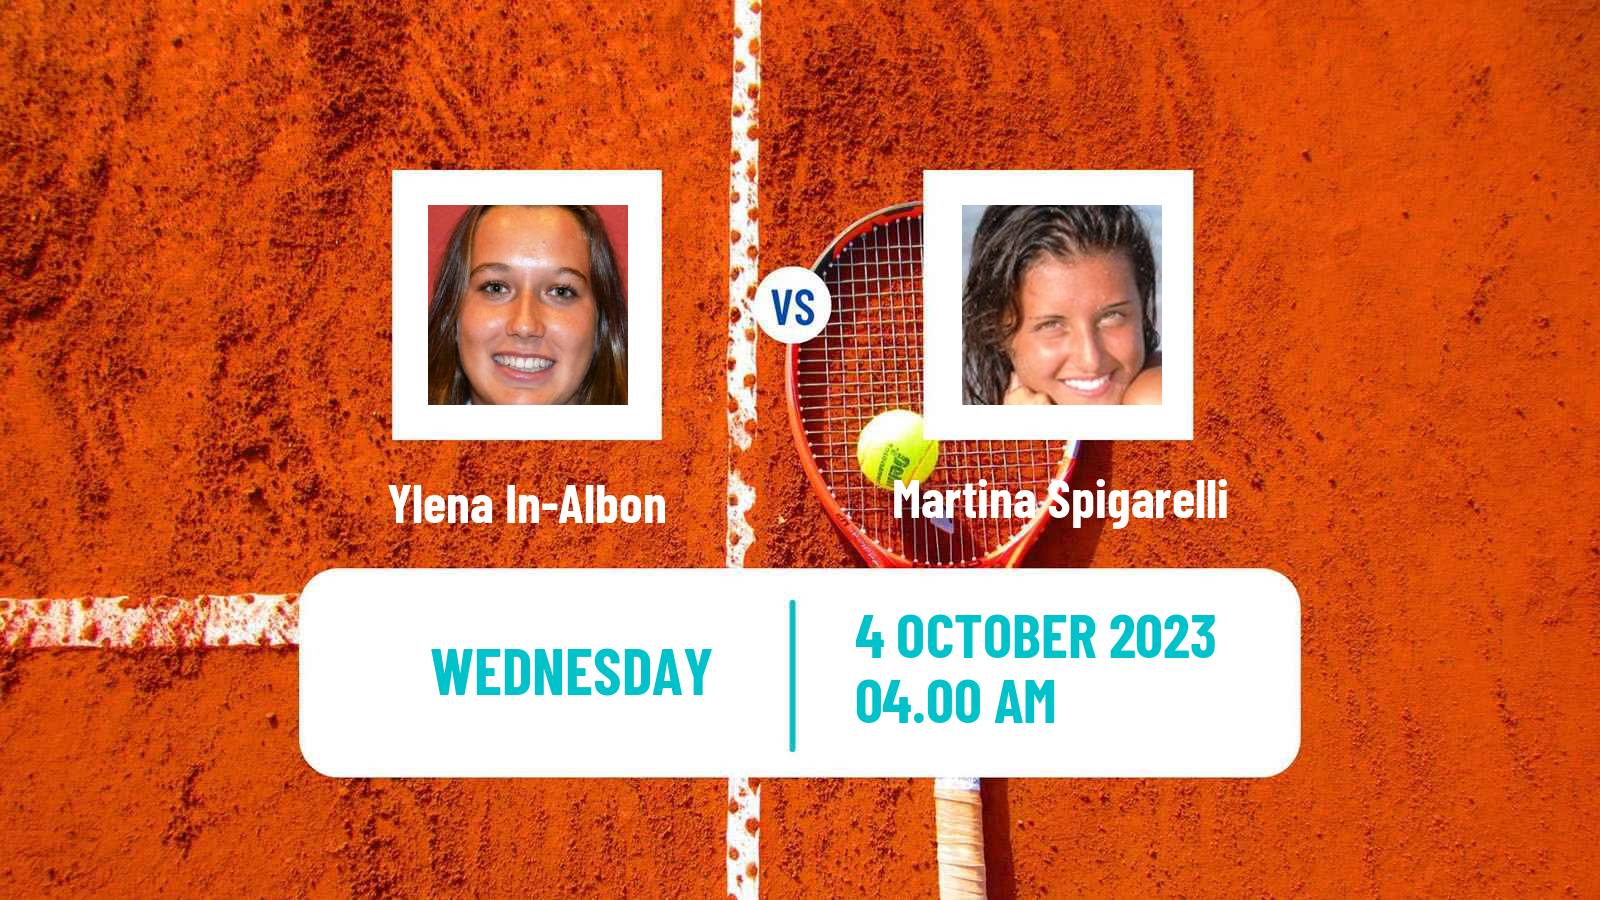 Tennis ITF W25 Santa Margherita Di Pula 8 Women Ylena In-Albon - Martina Spigarelli